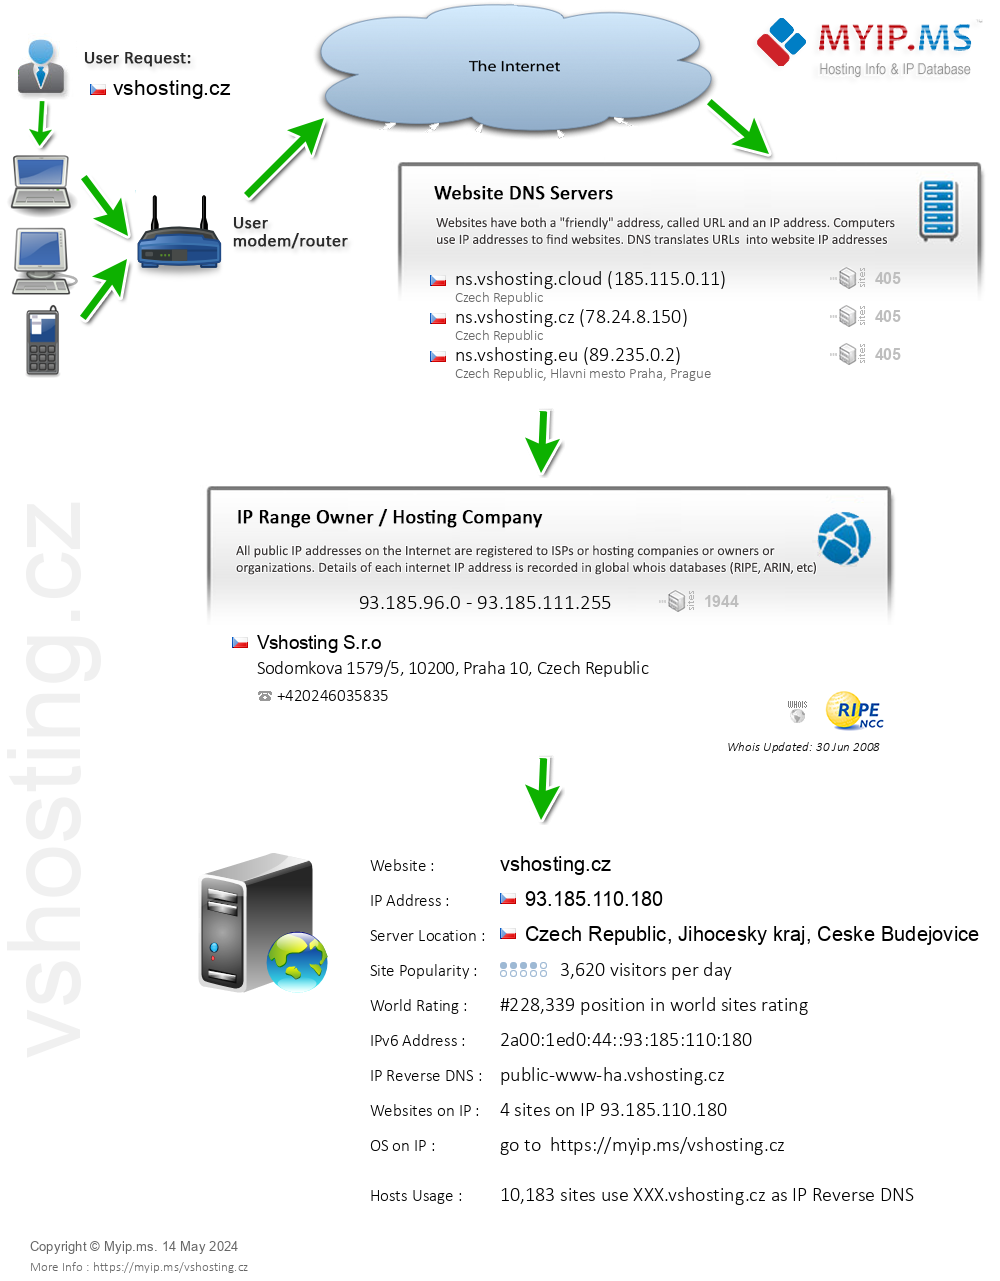 Vshosting.cz - Website Hosting Visual IP Diagram